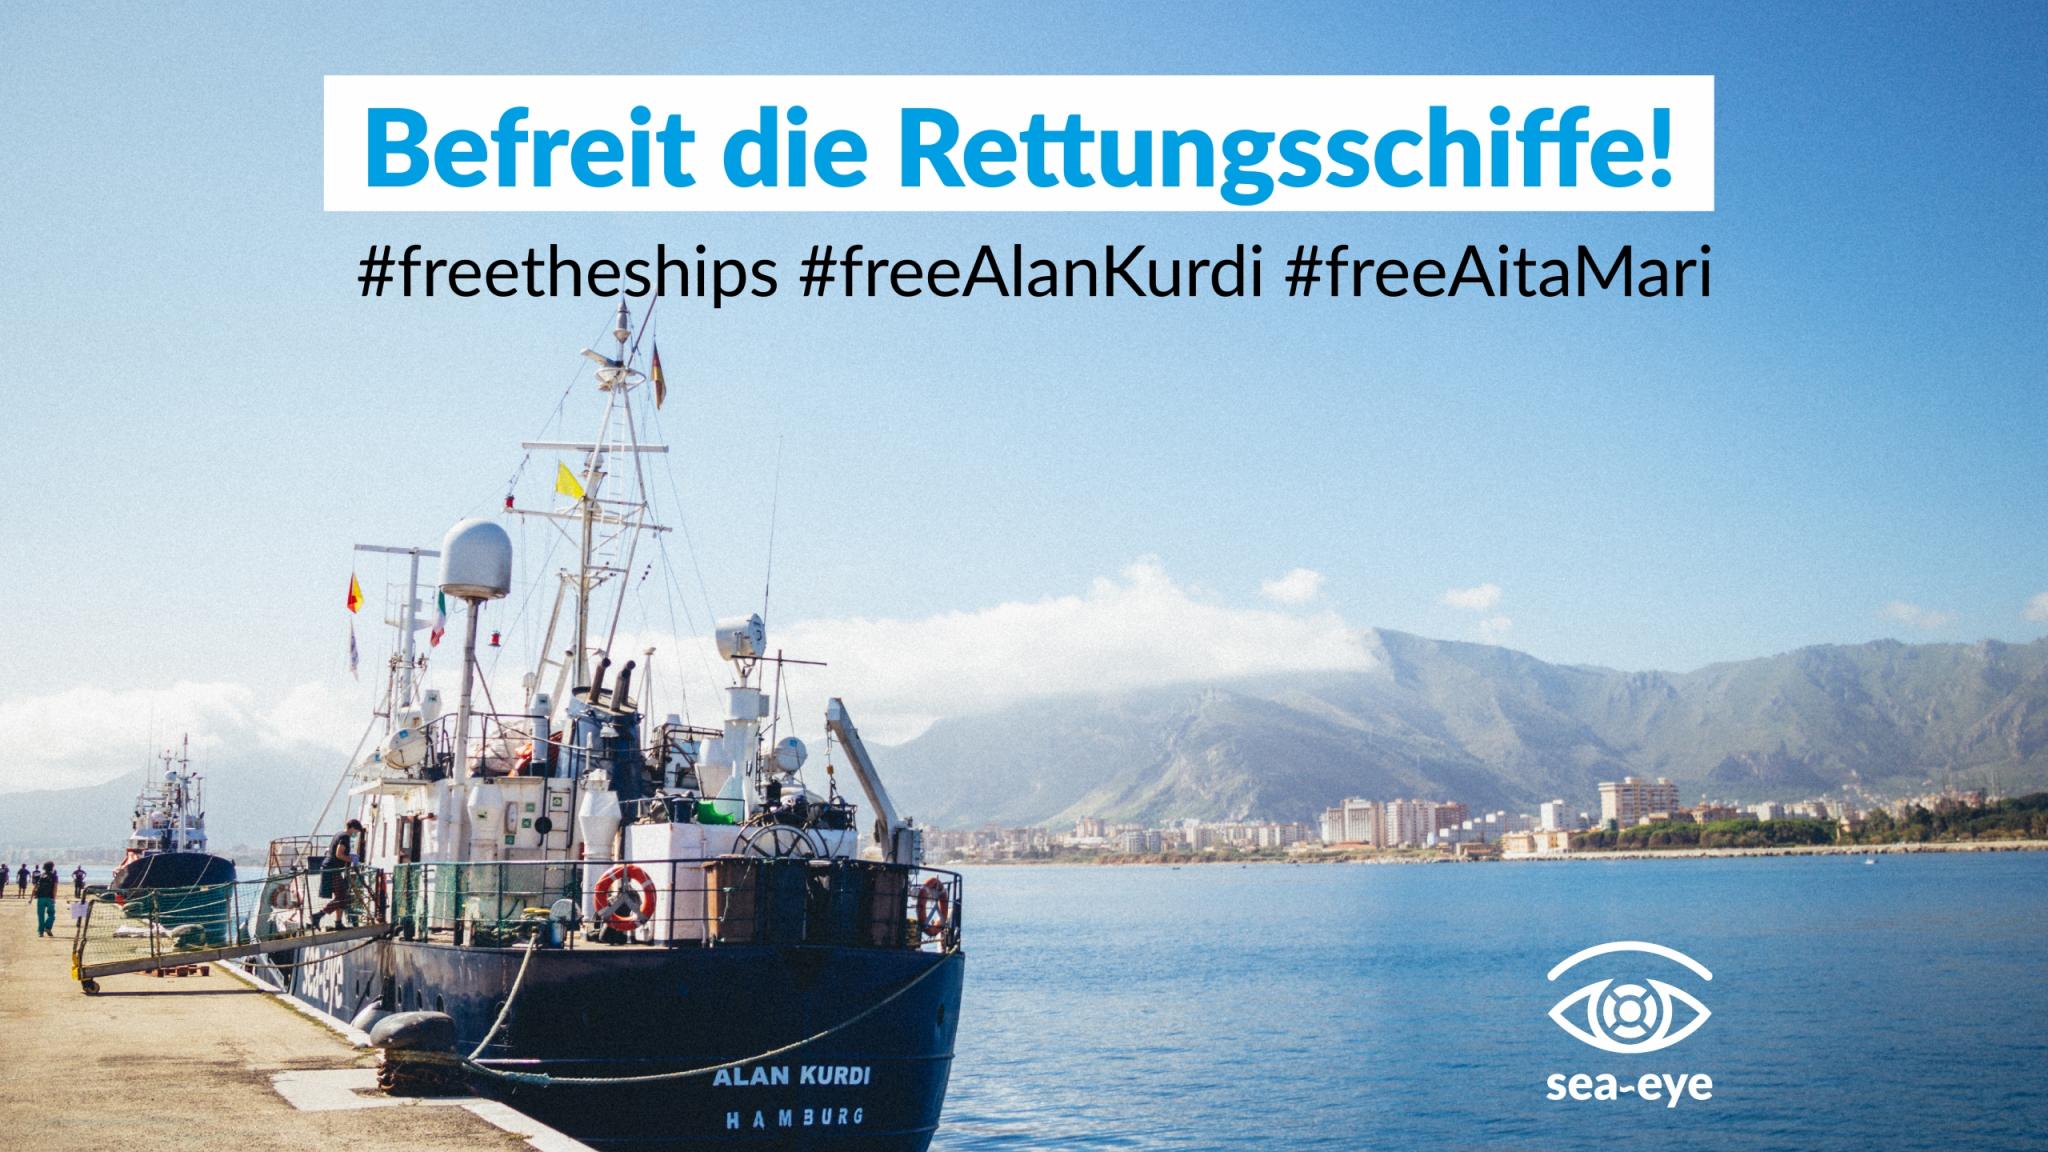 #freeAlanKurdi